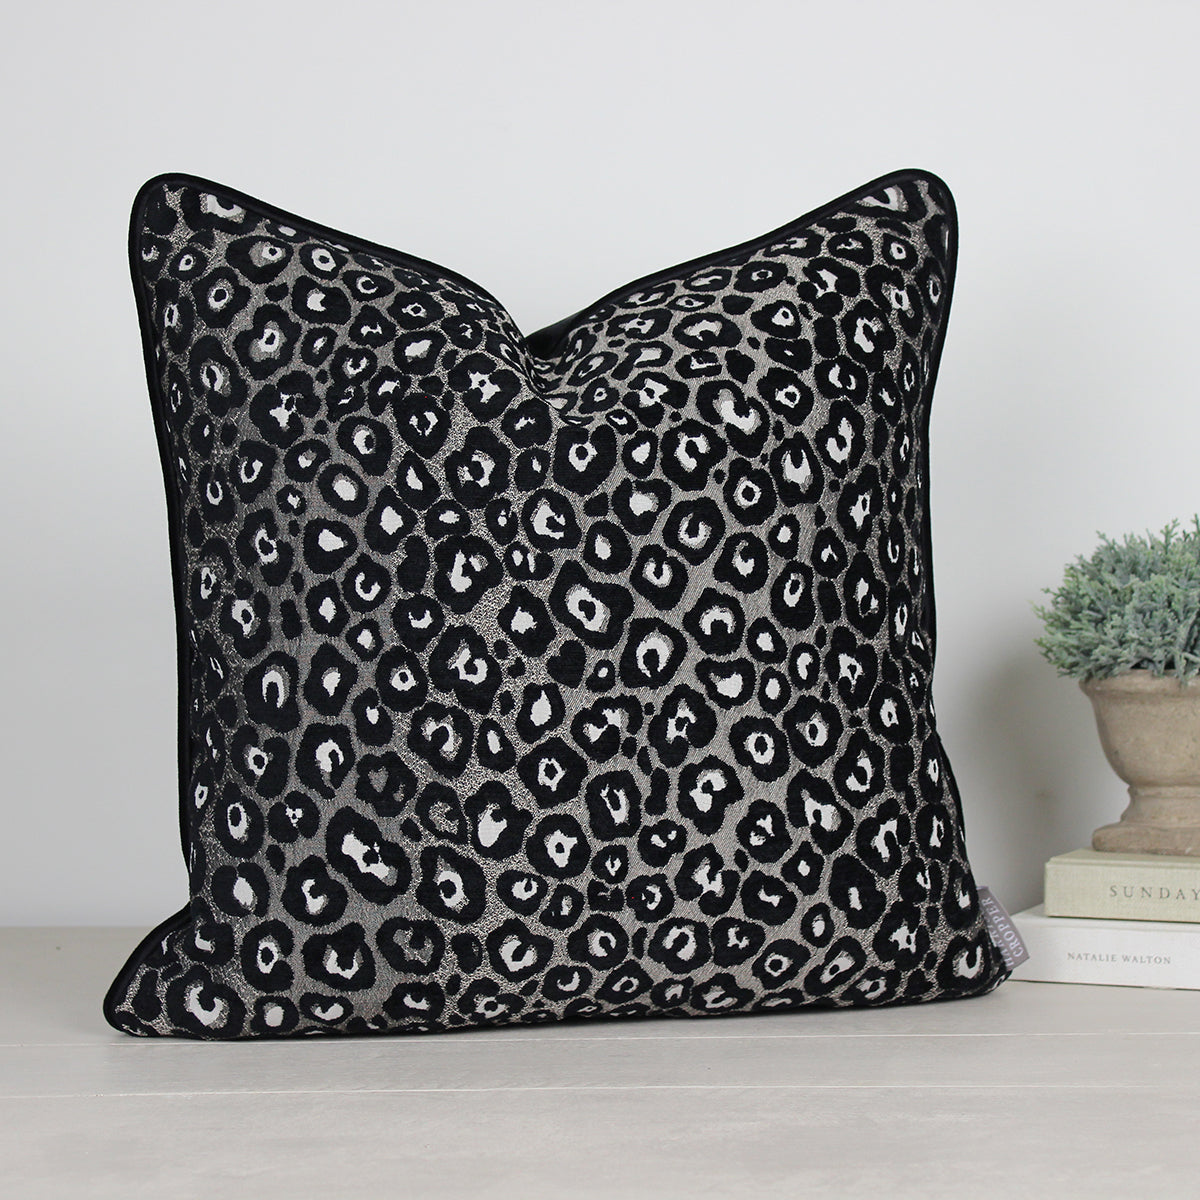 Zambia Silver & Black Cheetah Patterned Cushion